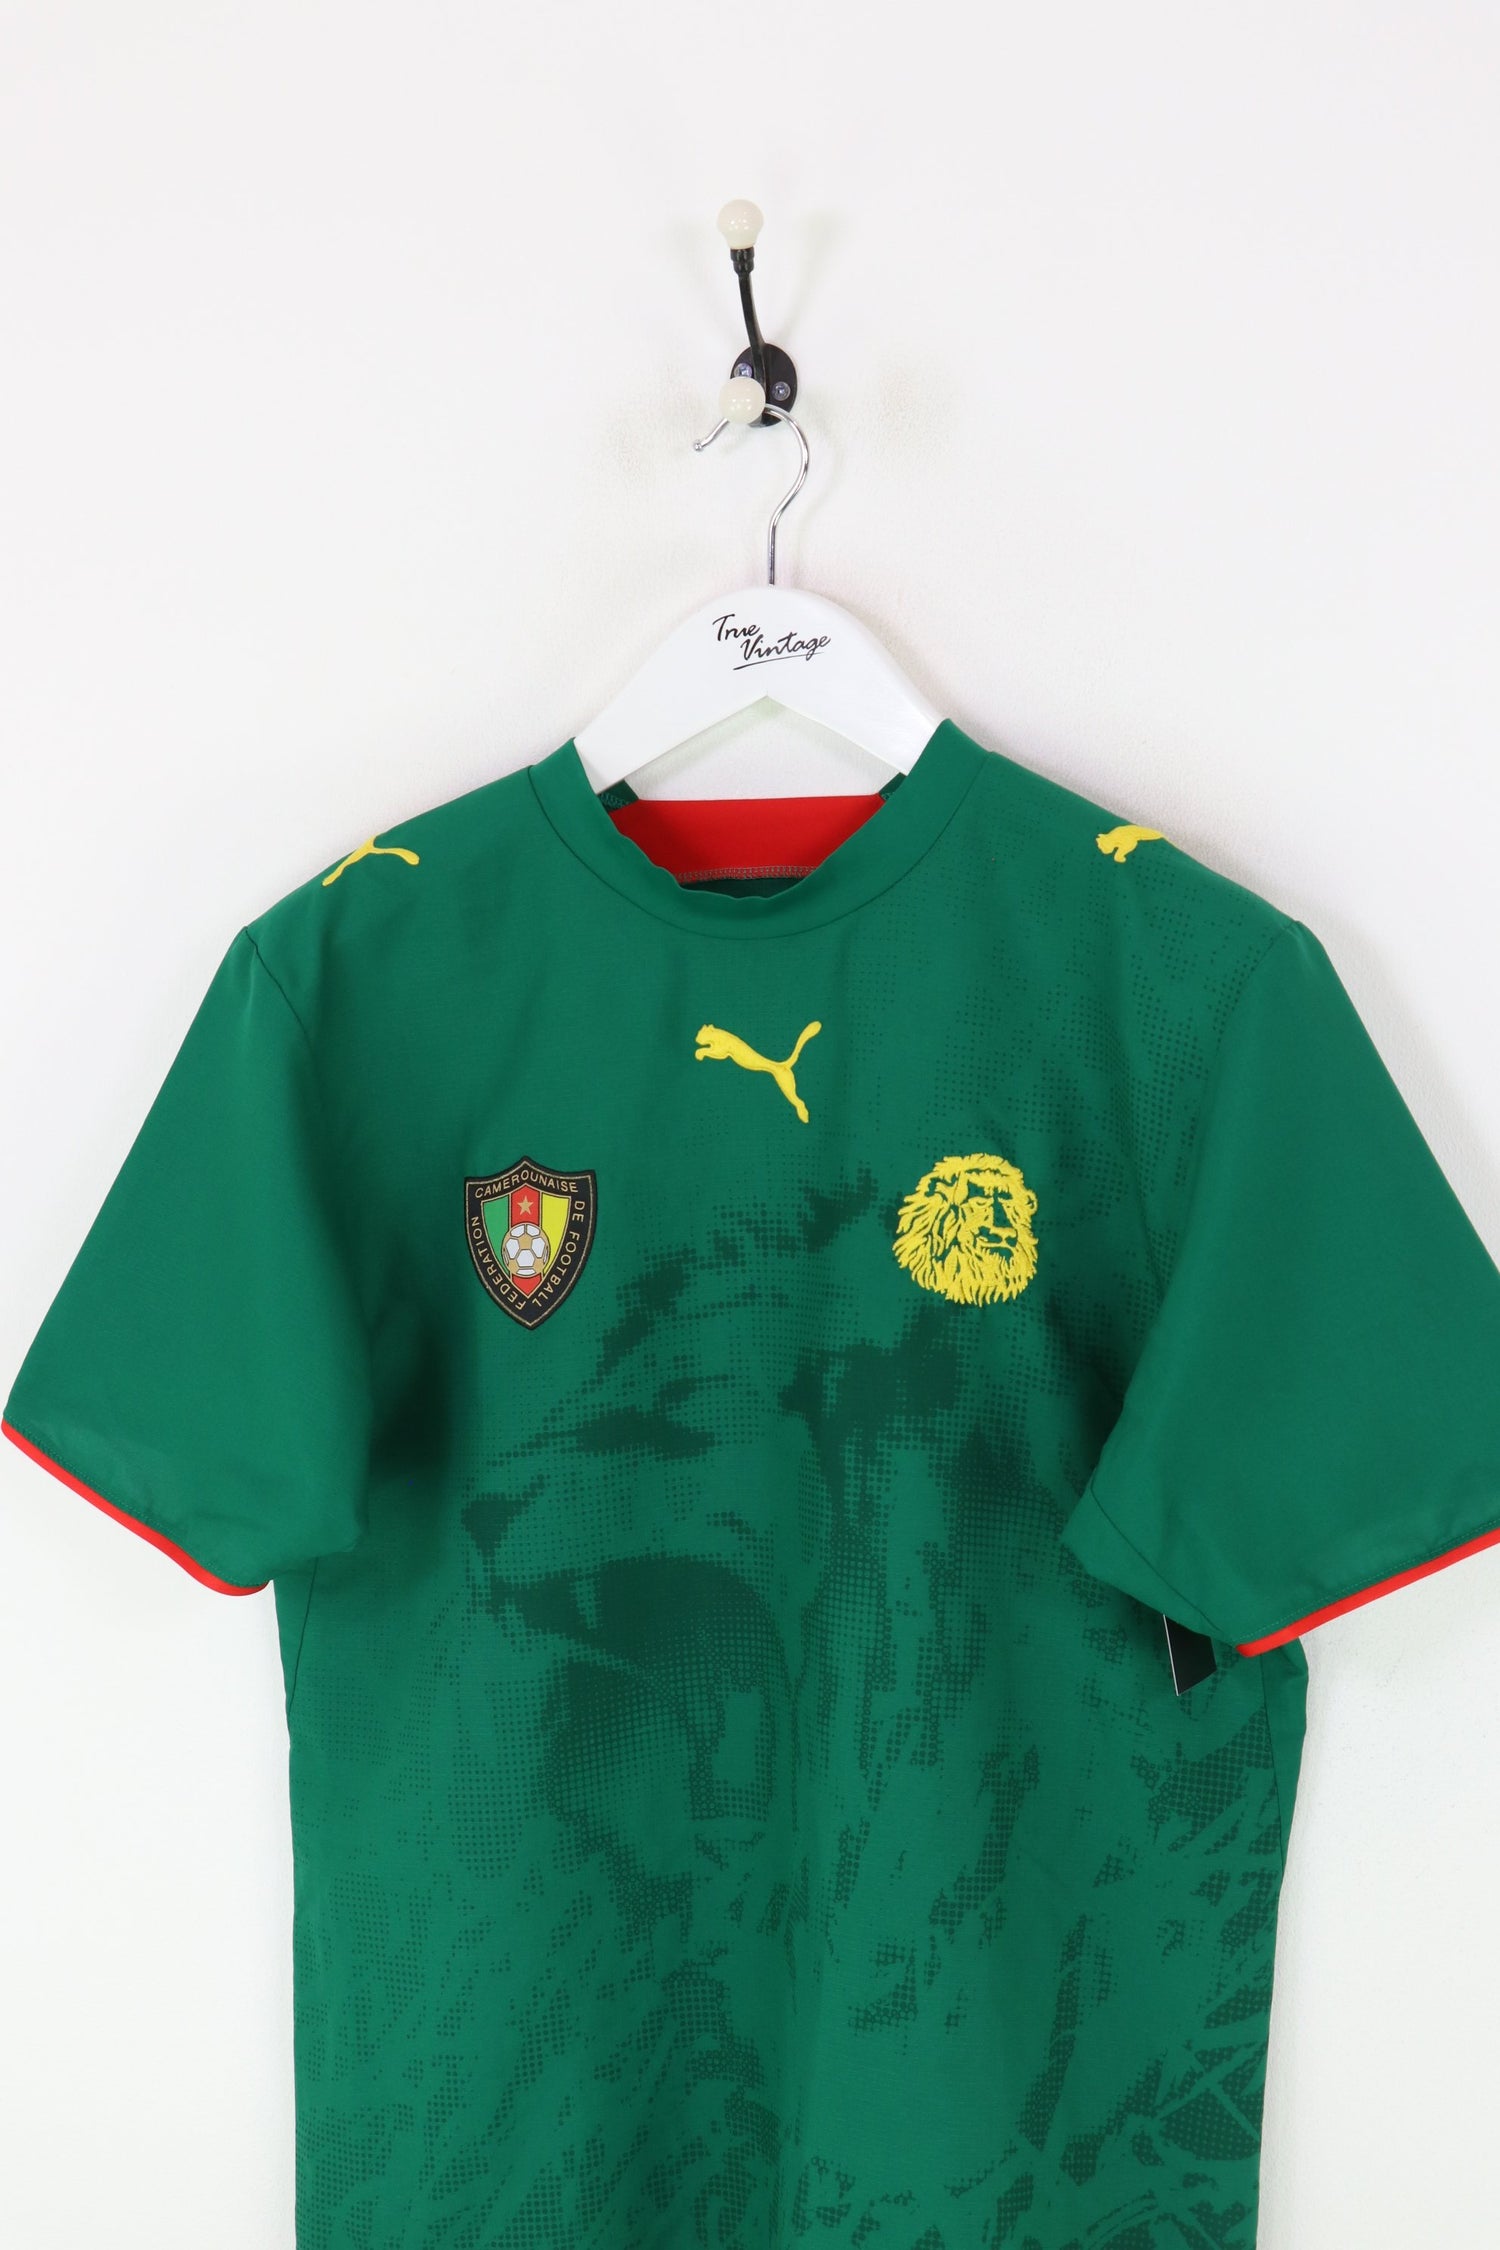 Puma Cameroon Football Shirt Green Medium